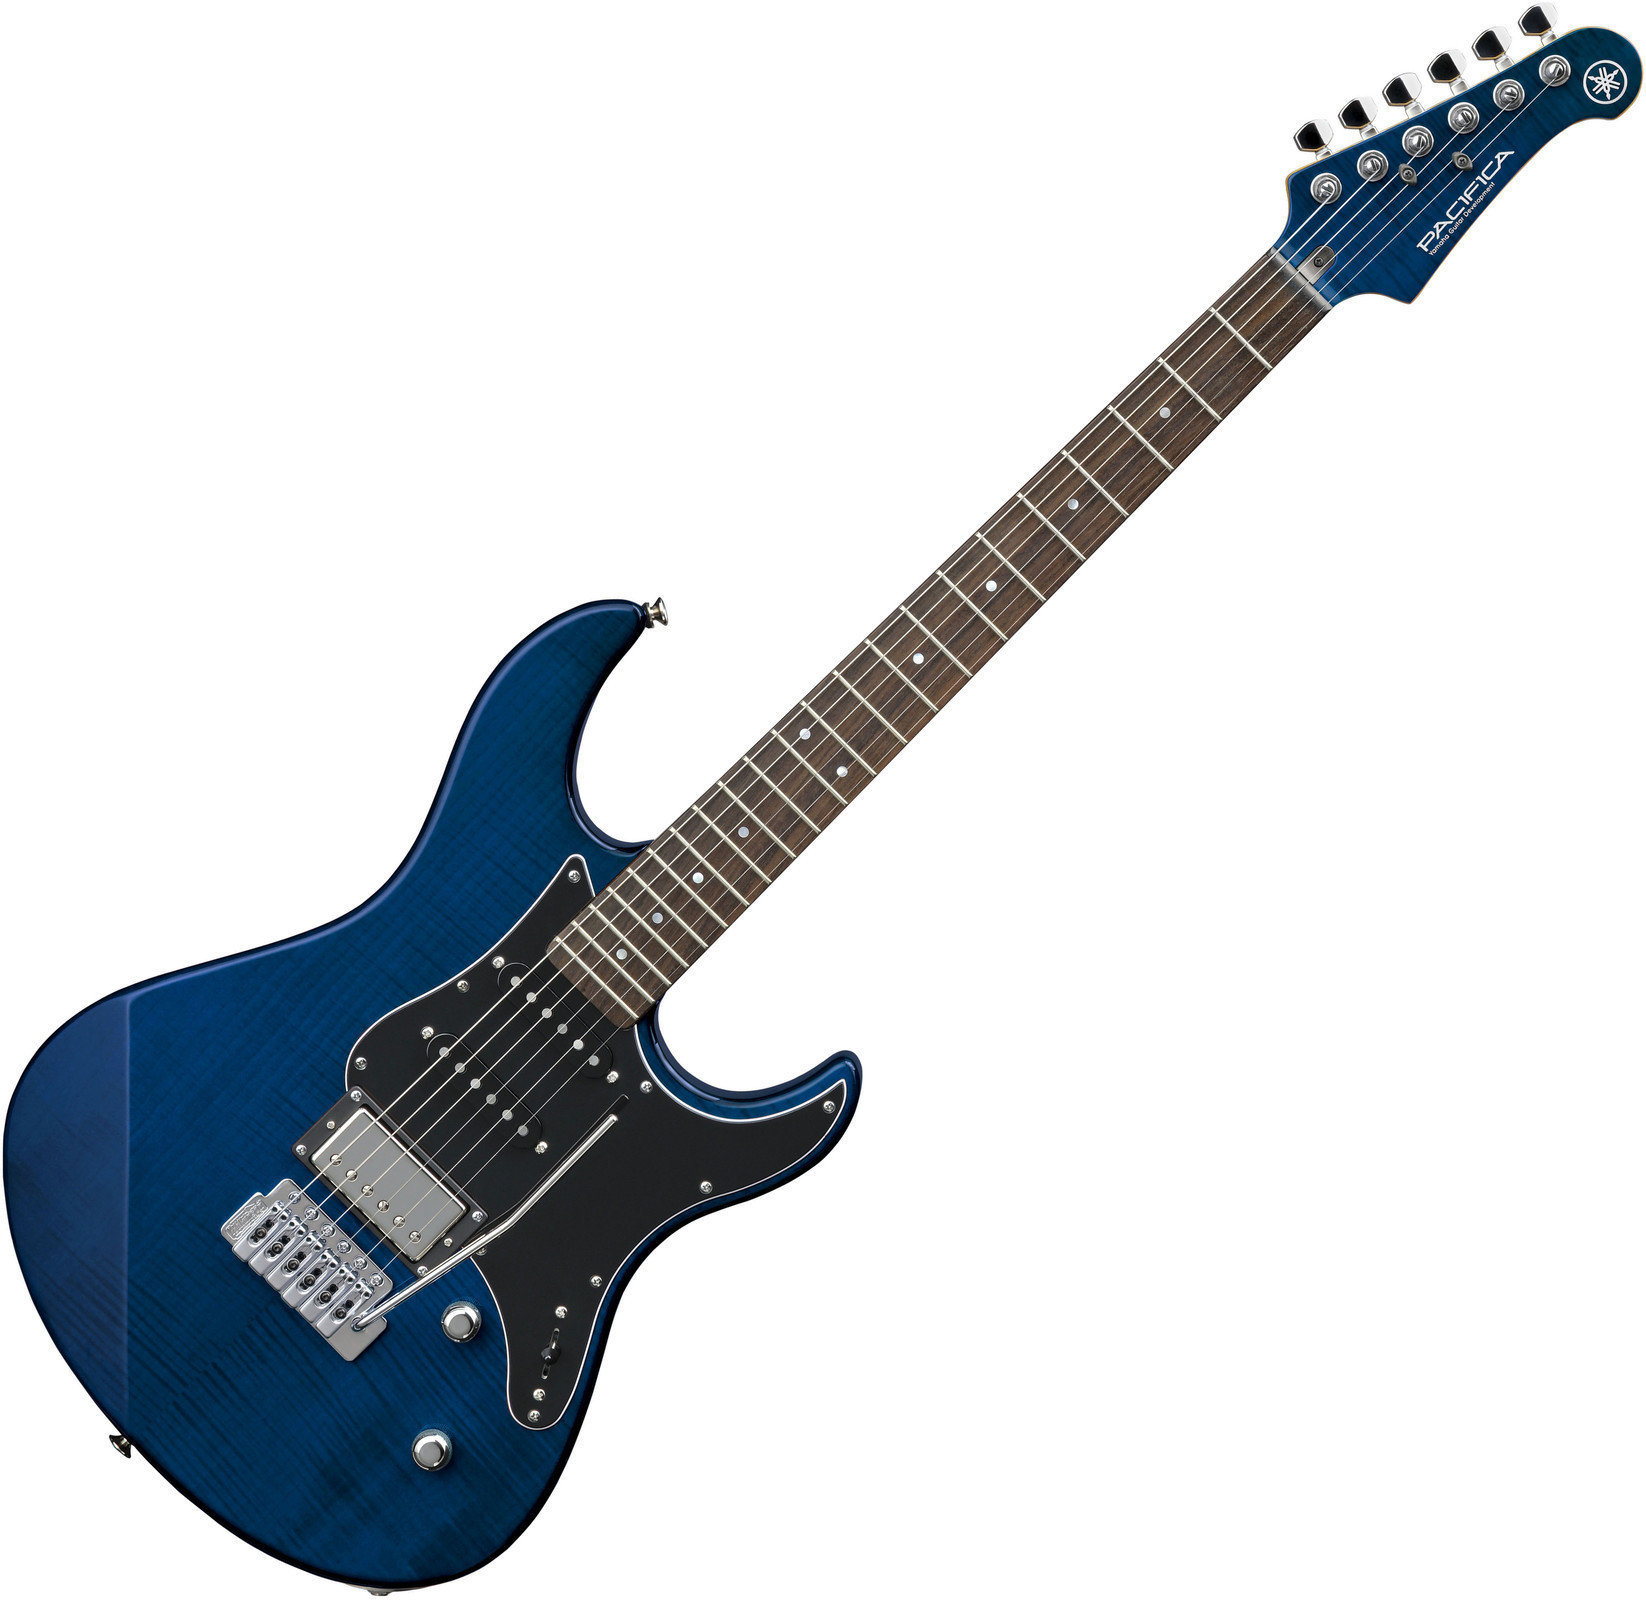 E-Gitarre Yamaha Pacifica 612 V Flamed Maple Translucent BL